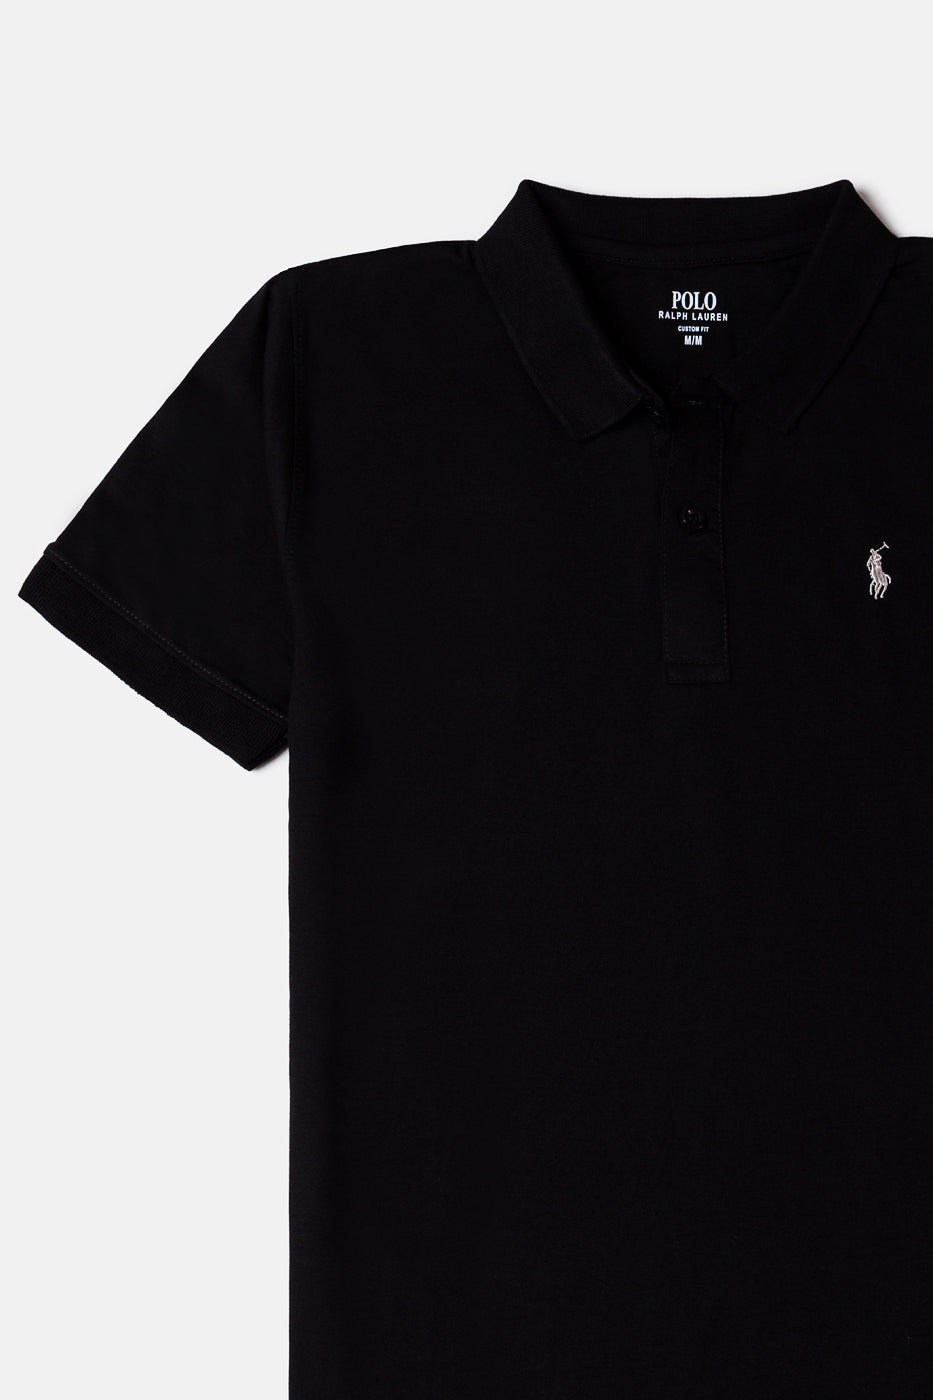 RL Premium Imported Polo Shirt - Black